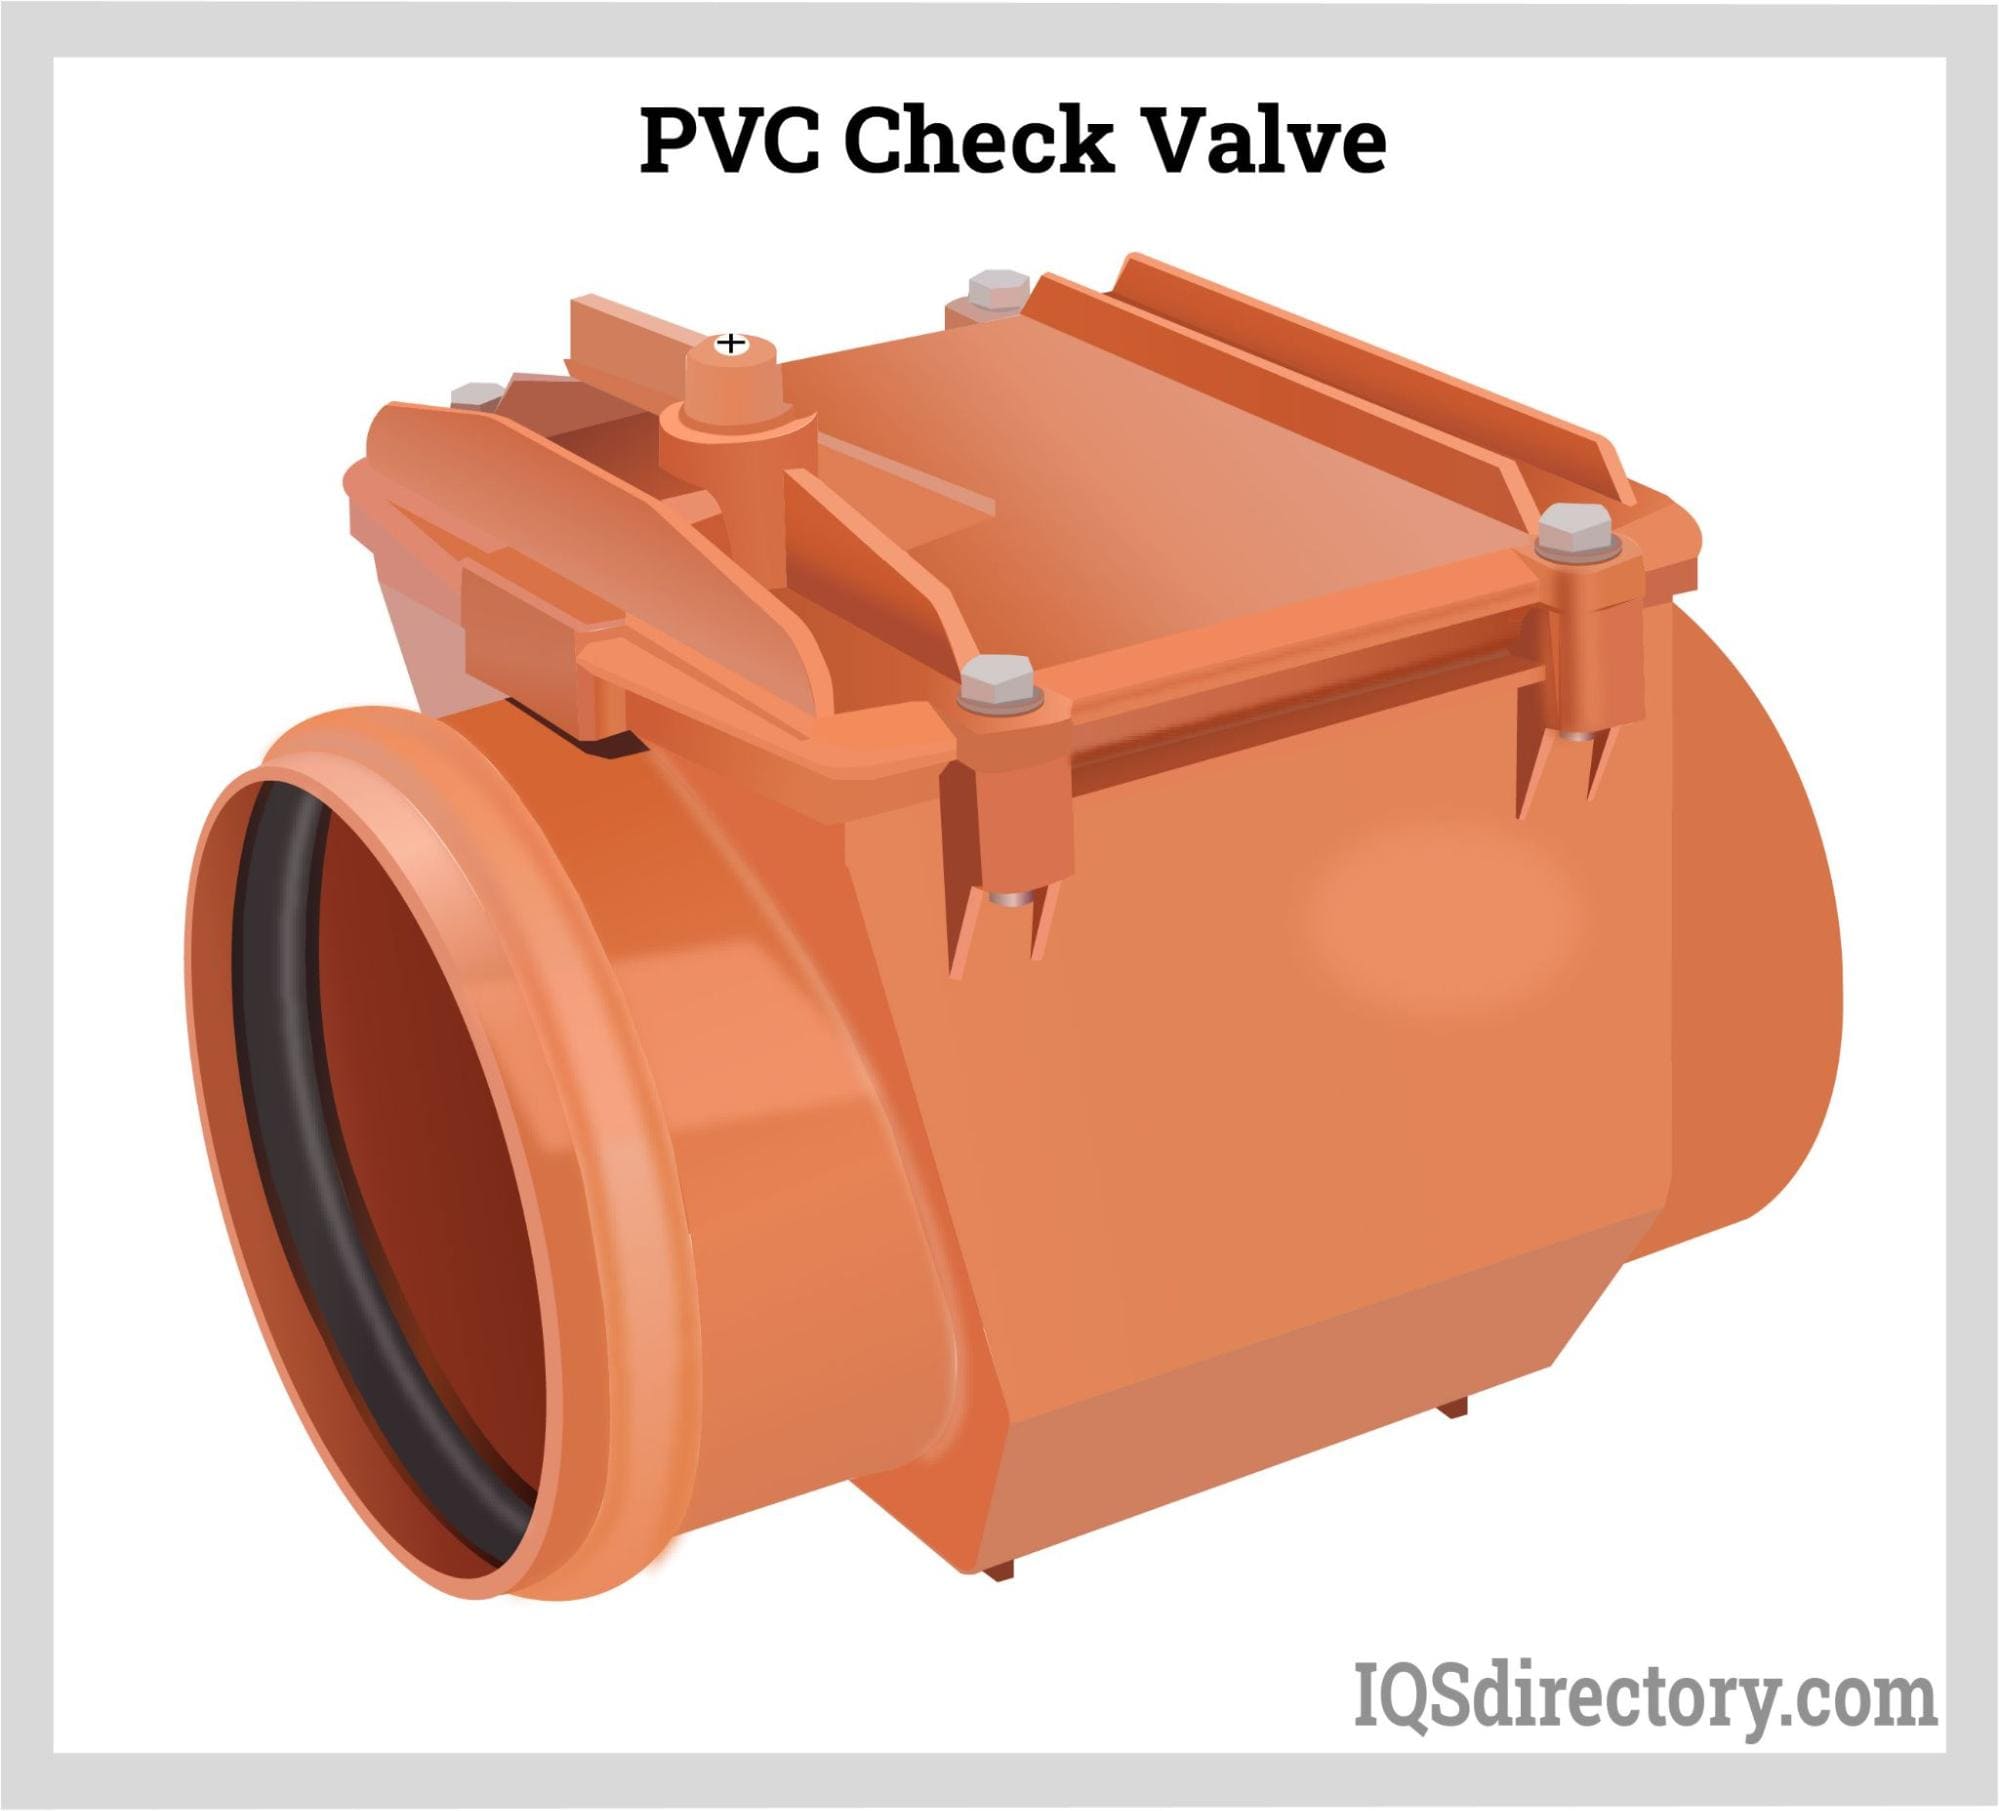 PVC Check Valve